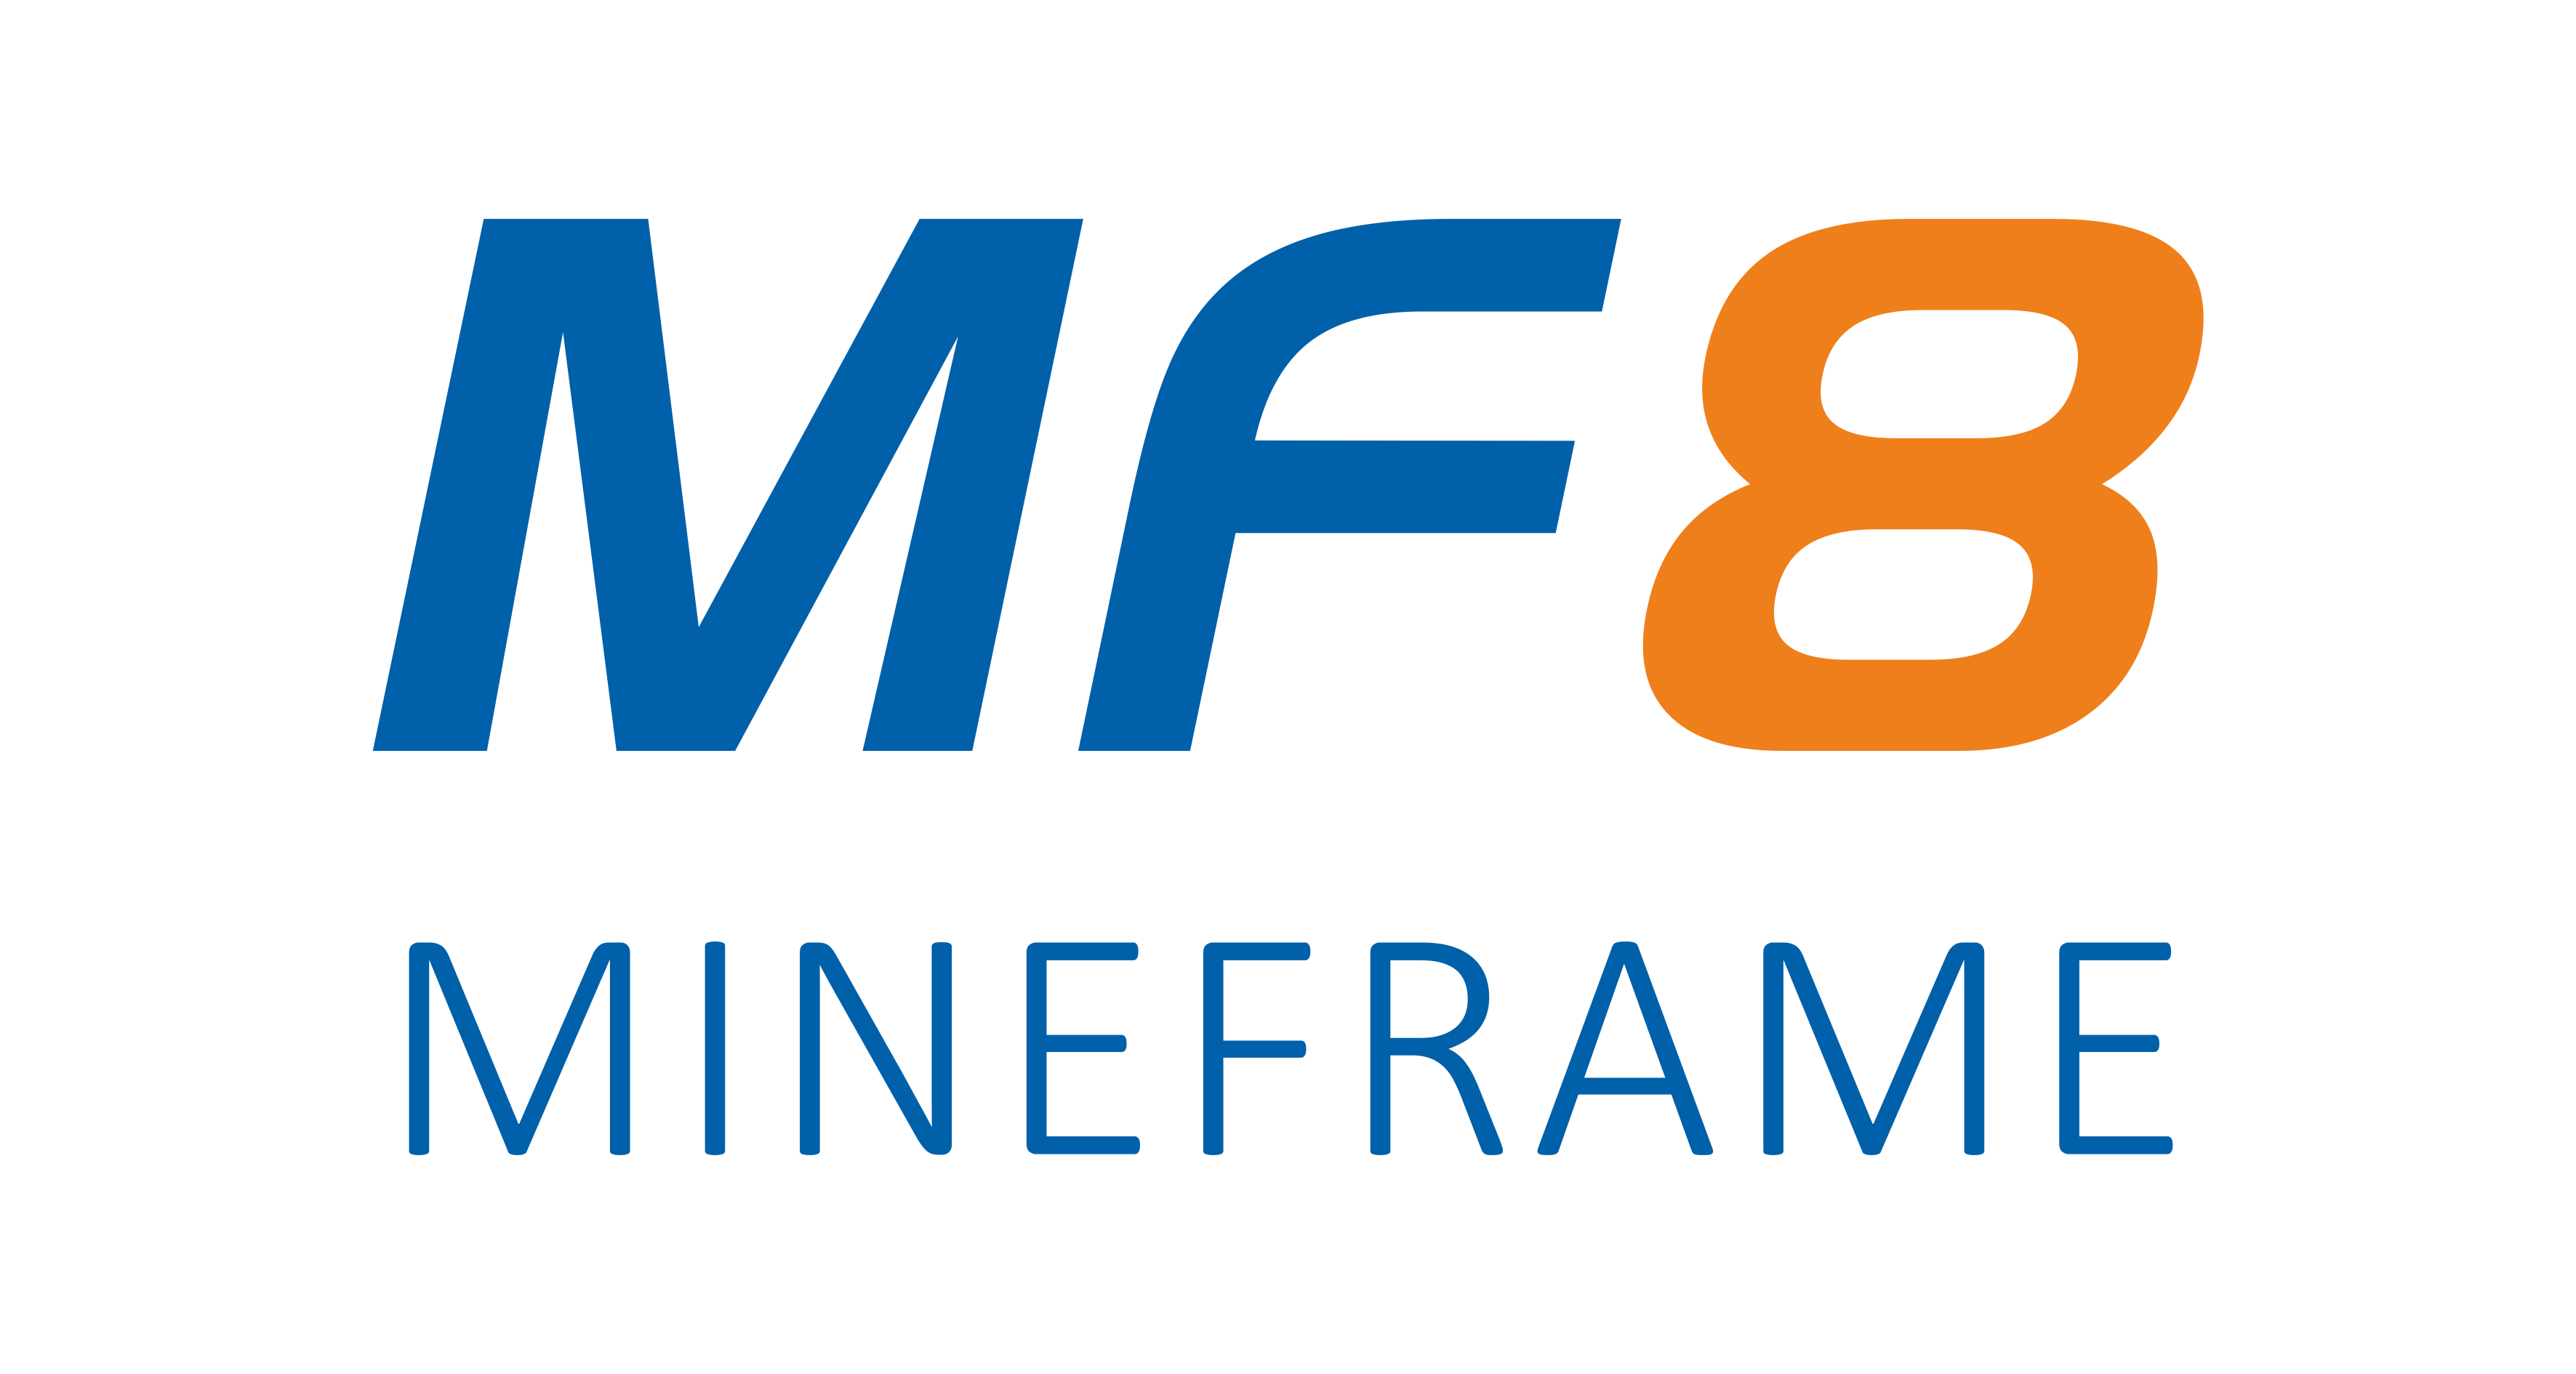 Mineframe logo